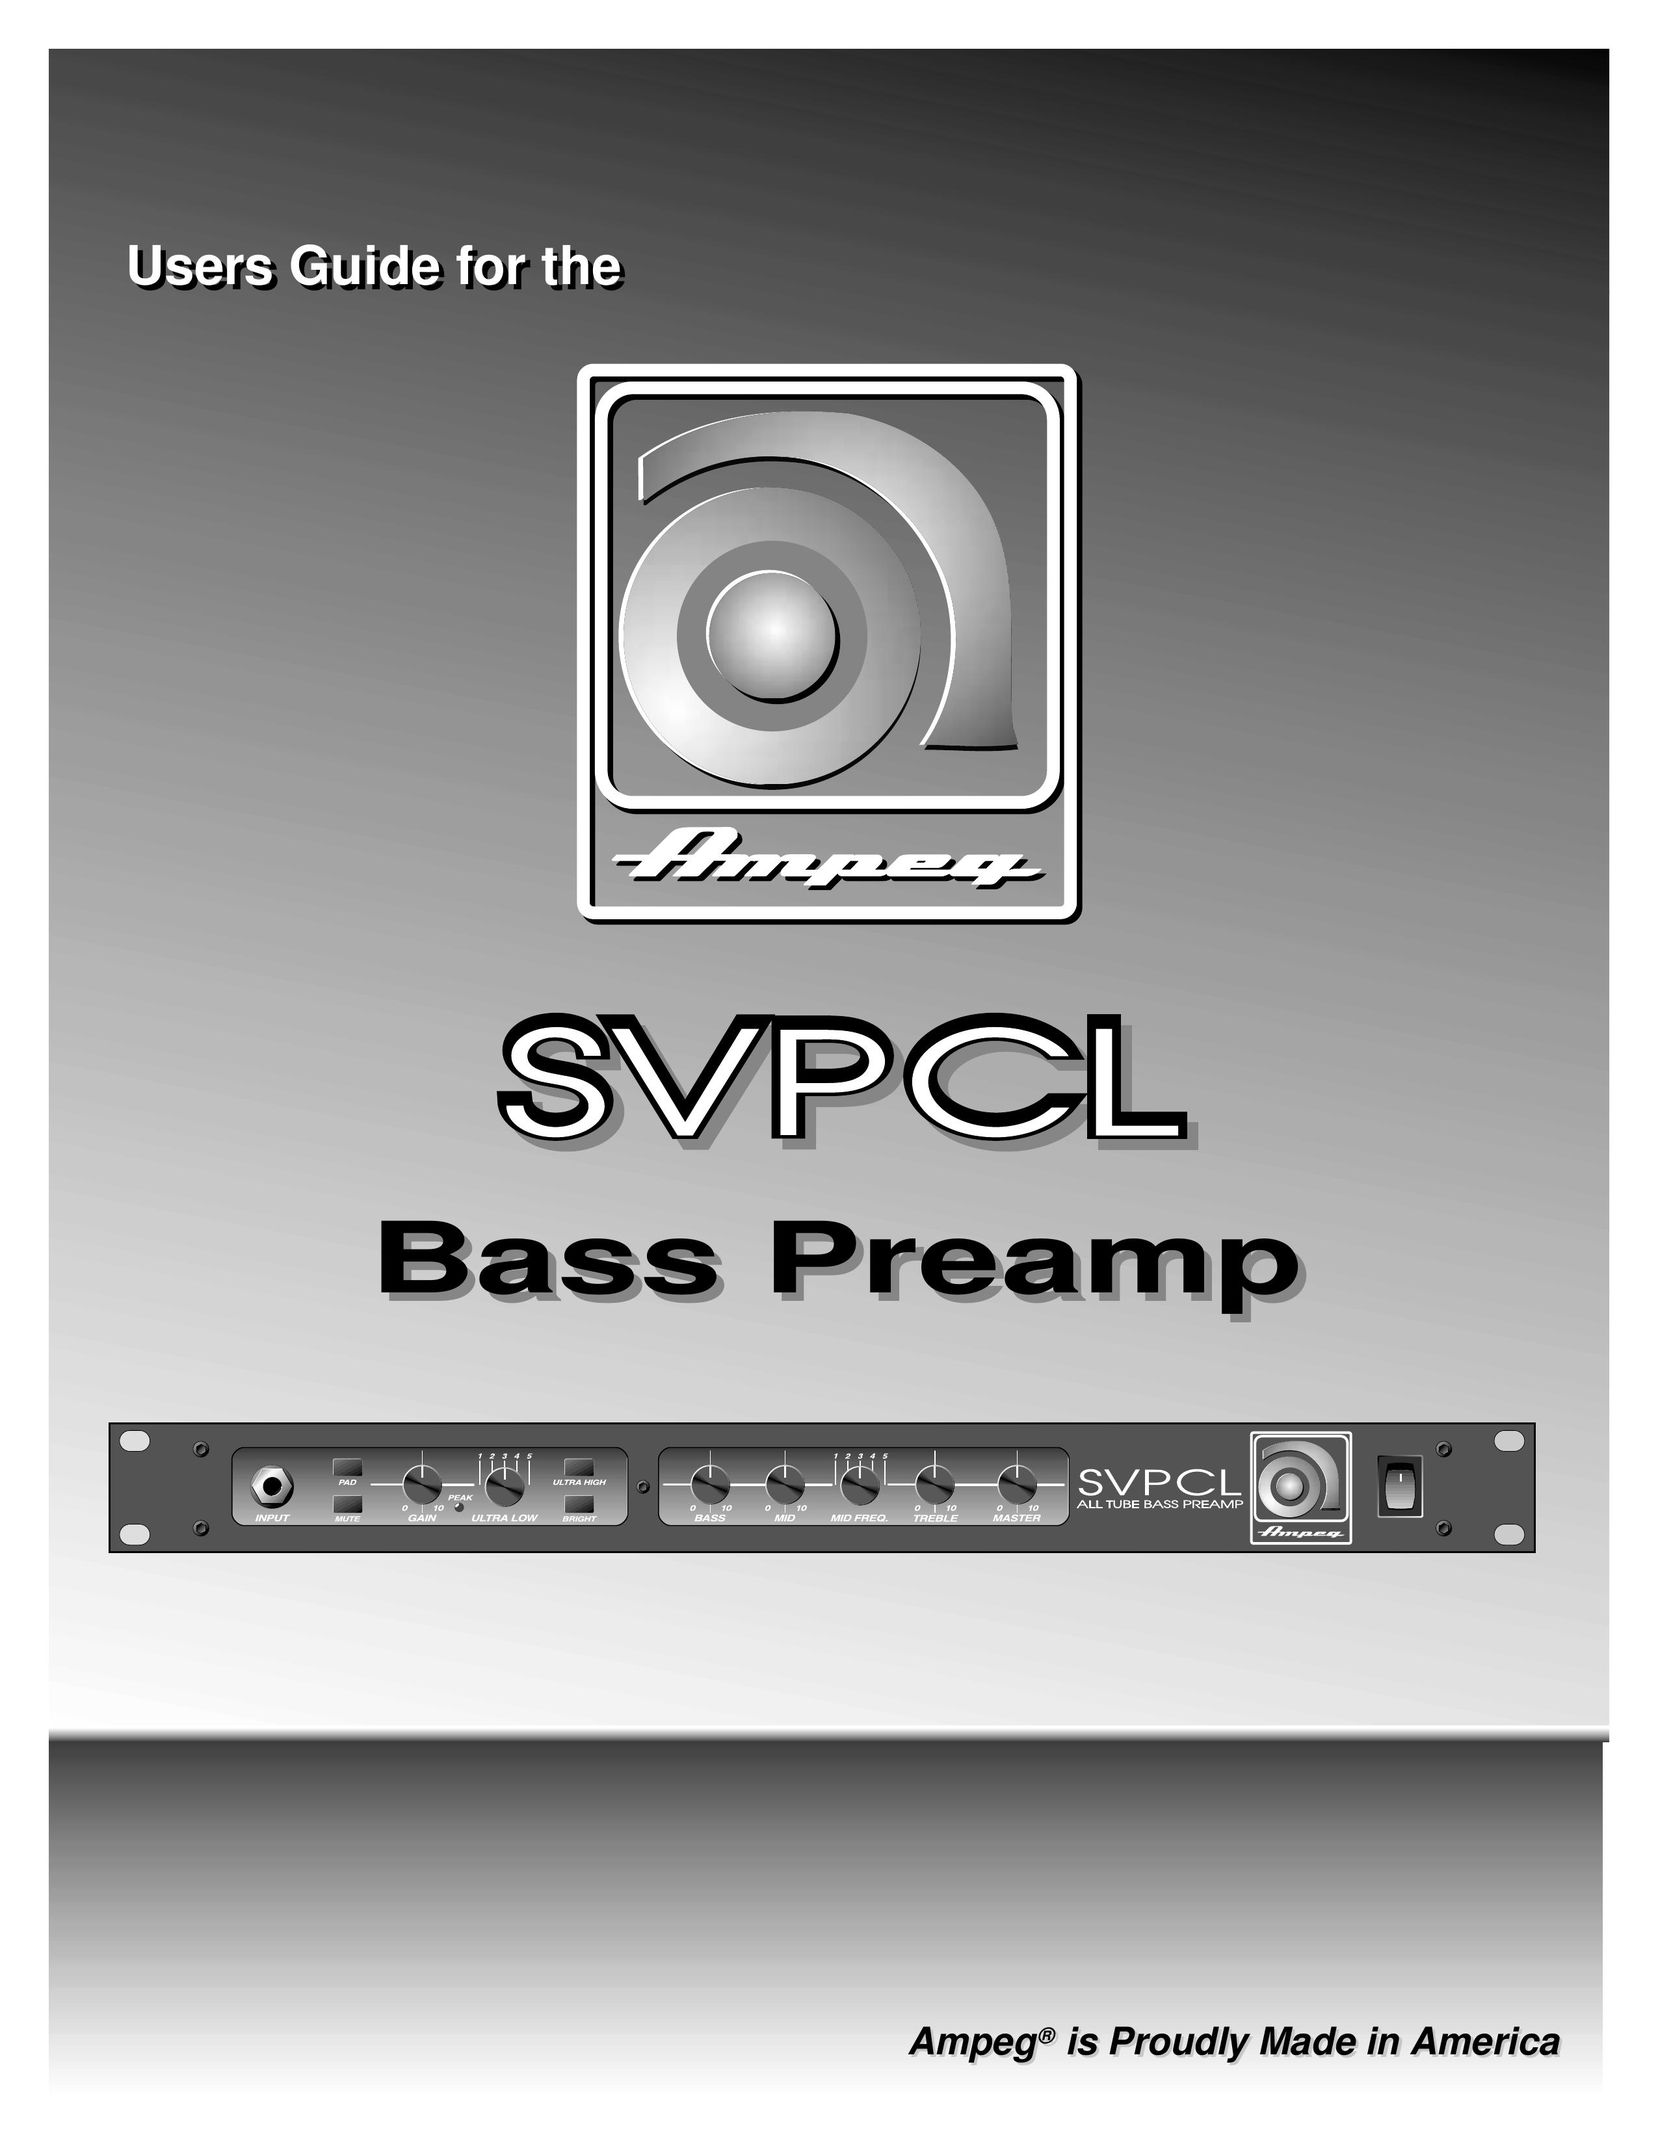 Ampeg SVPCL Stereo Amplifier User Manual